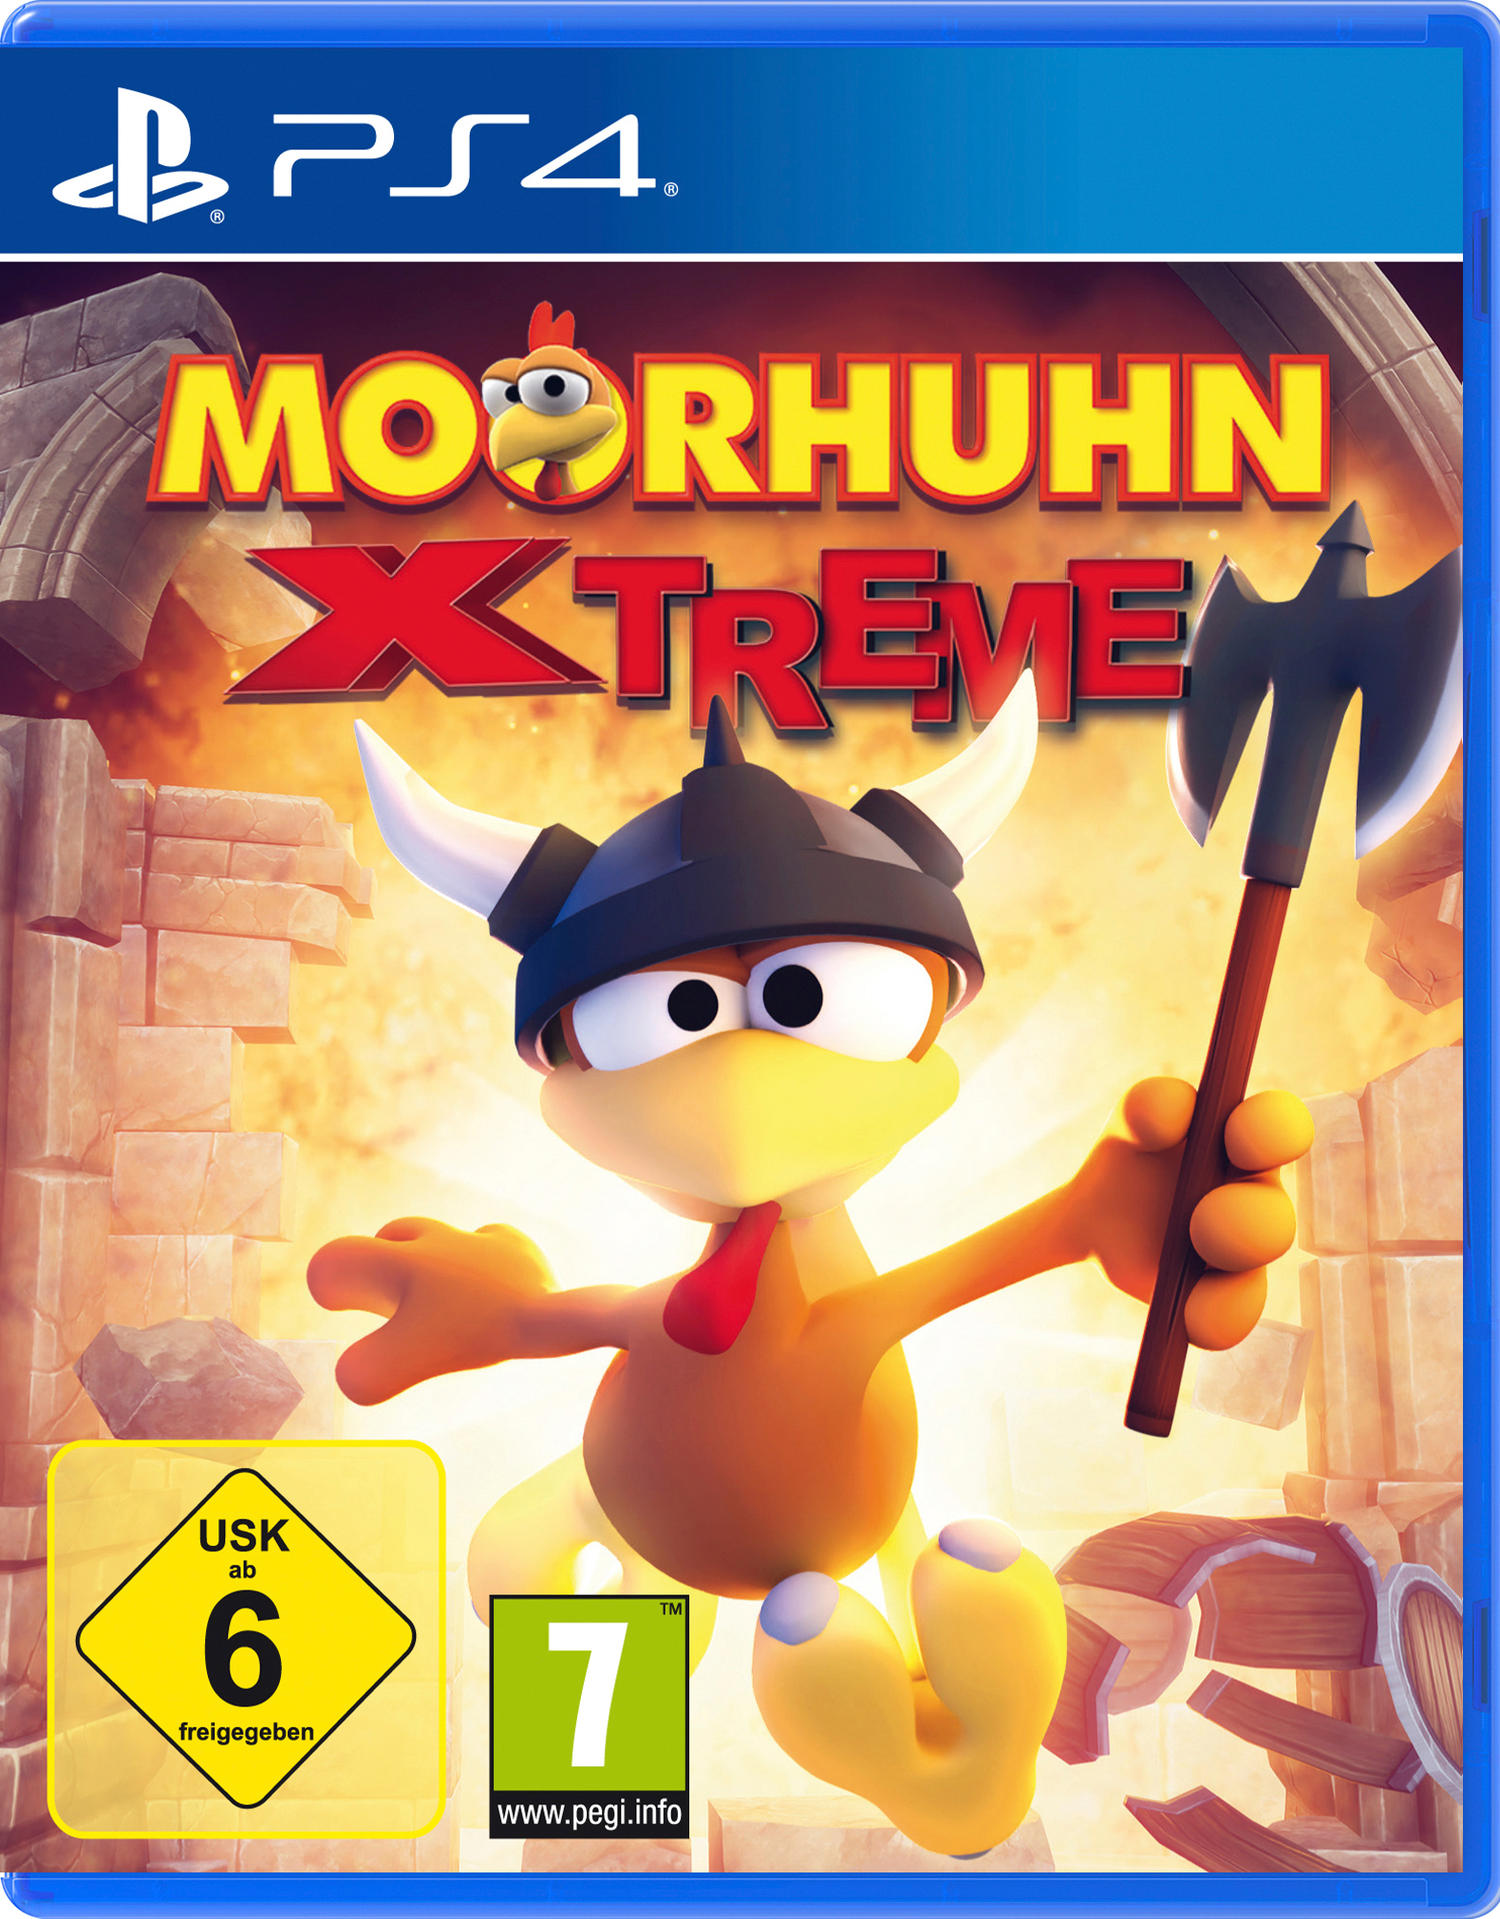 Moorhuhn Xtreme - 4] [PlayStation